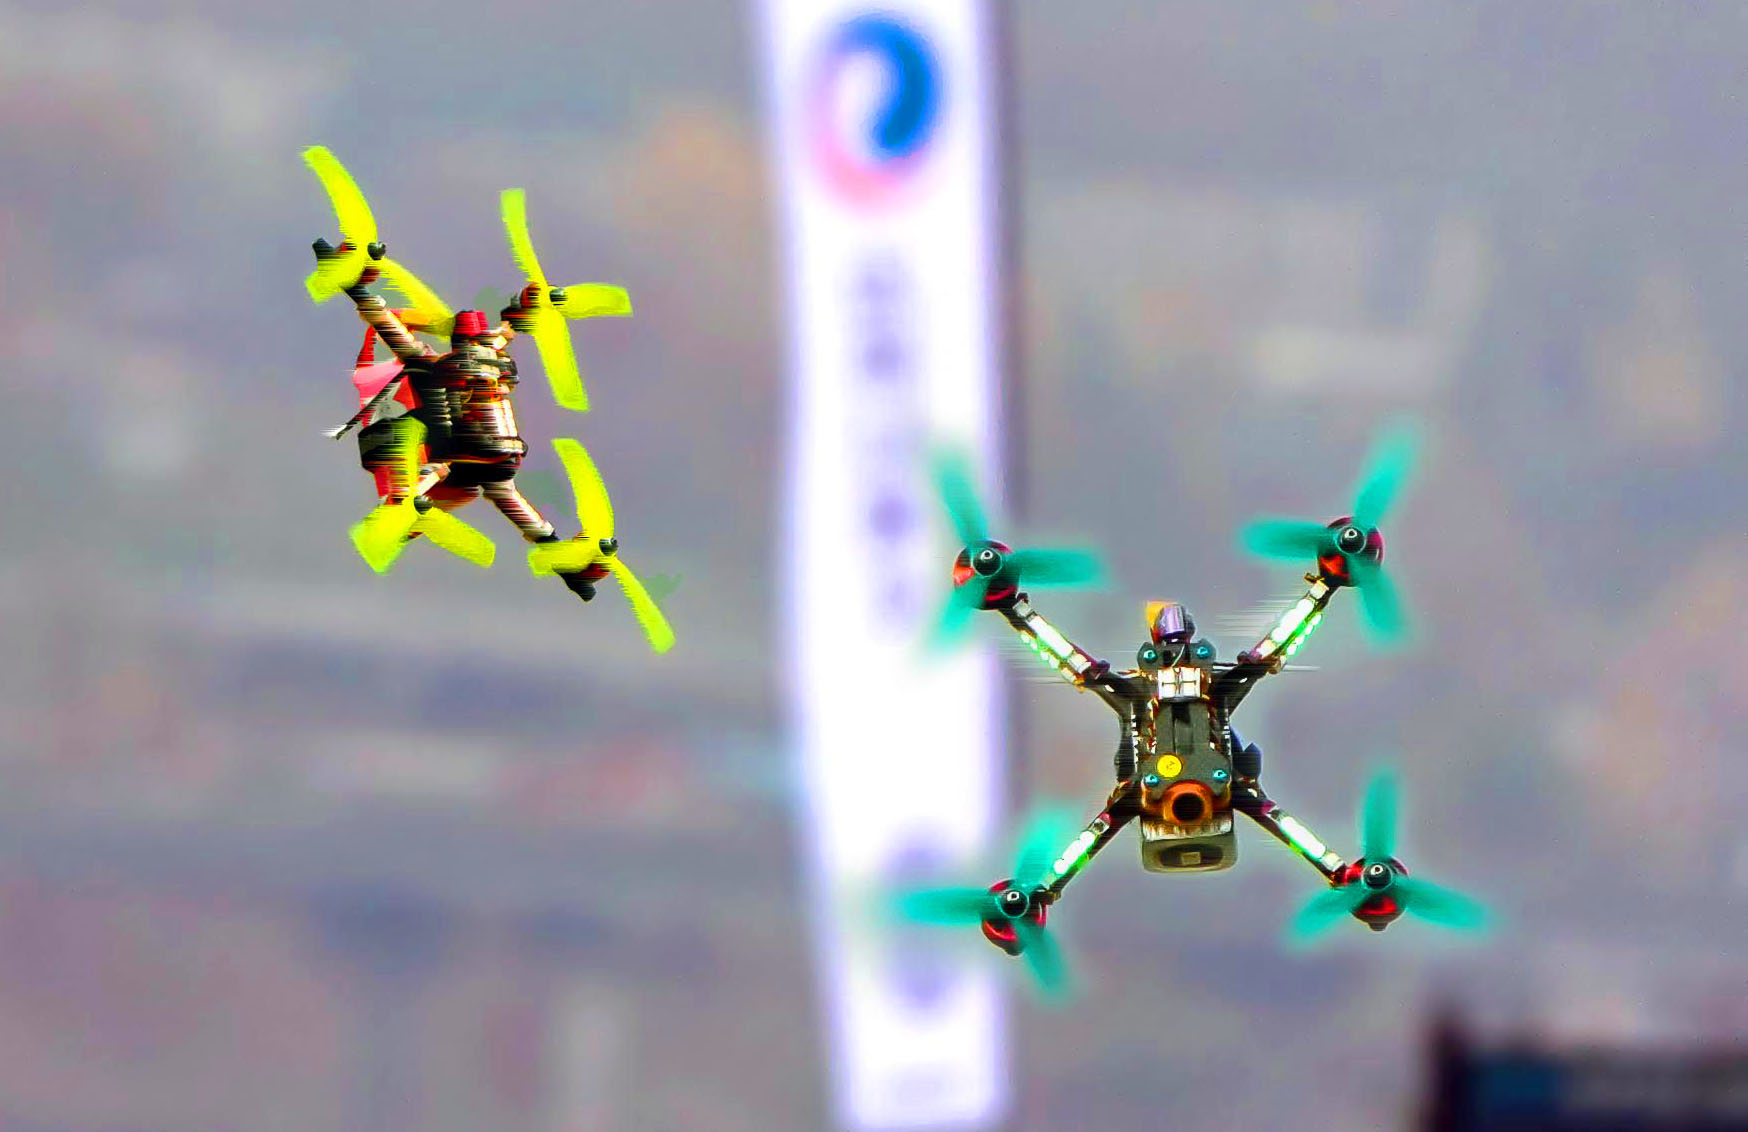 2023 FAI World Drone Racing Championship to Korea